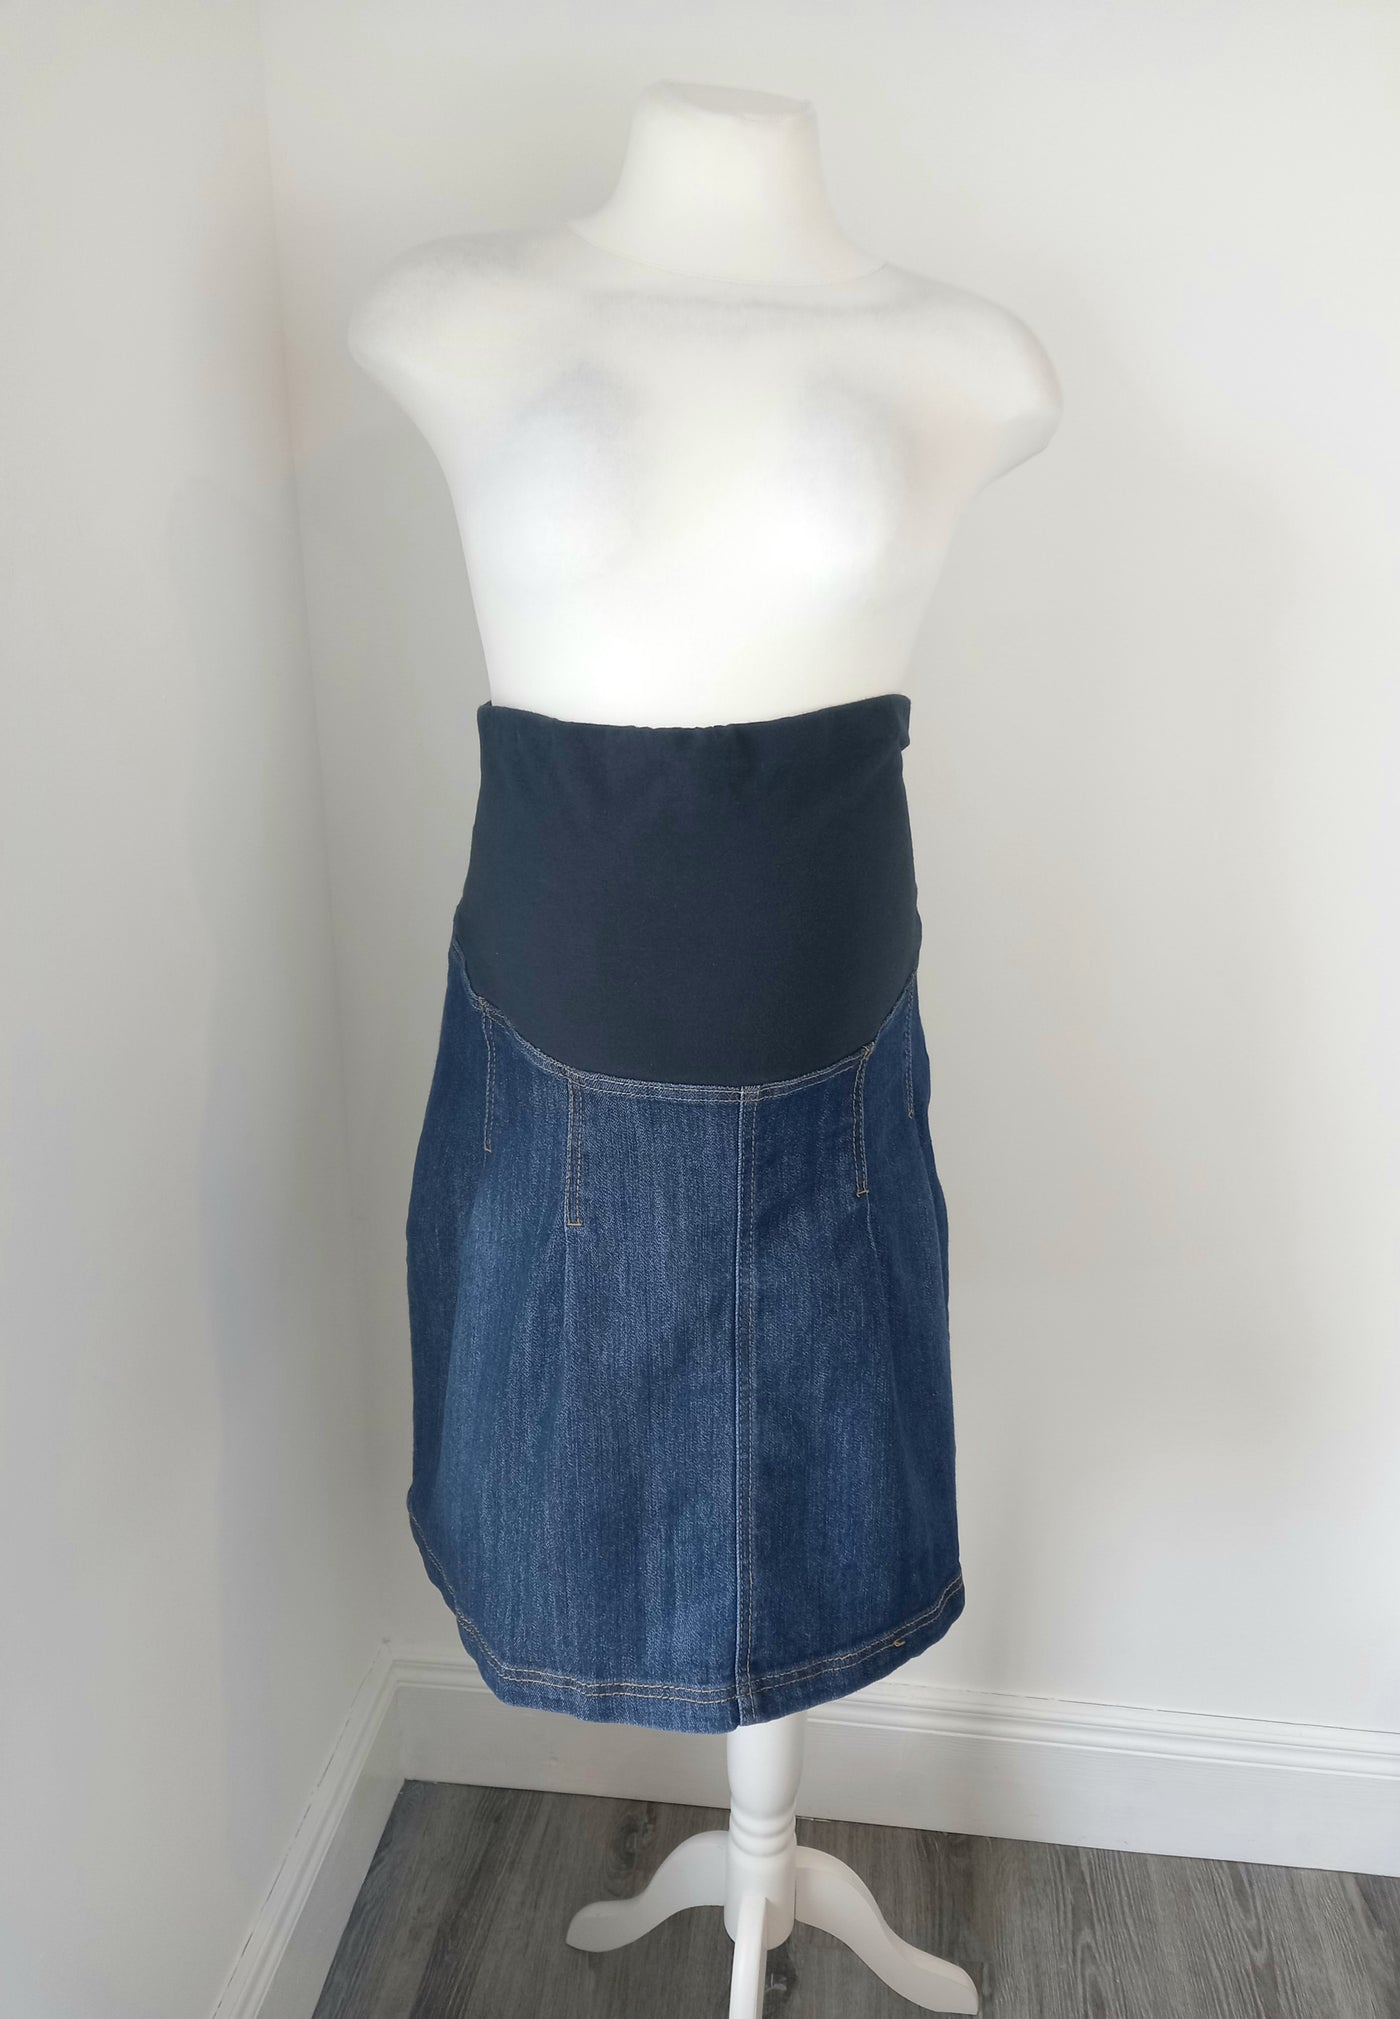 Jojo Maman Bebe blue denim overbump skirt - Size 14